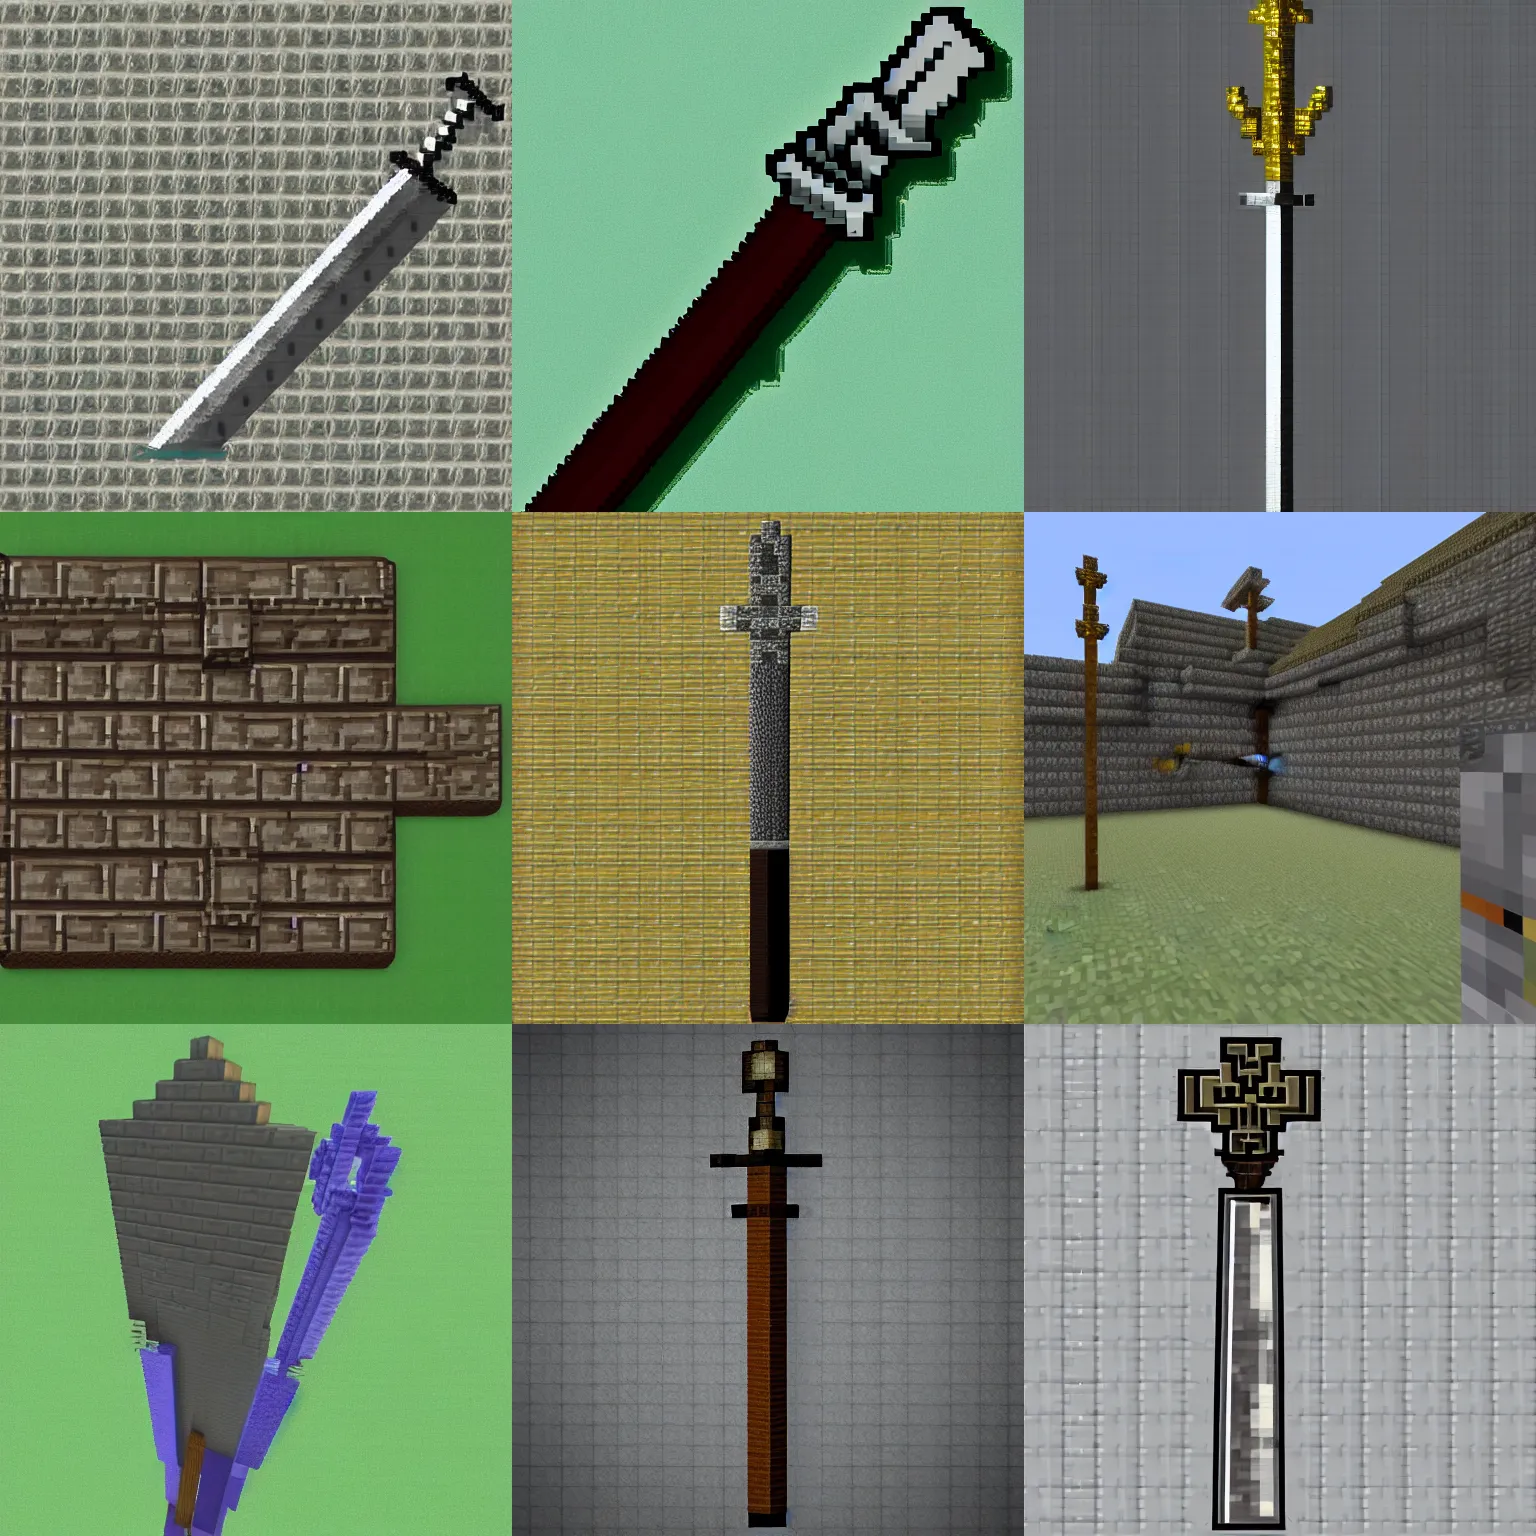 New 3d Swords Minecraft Texture Pack